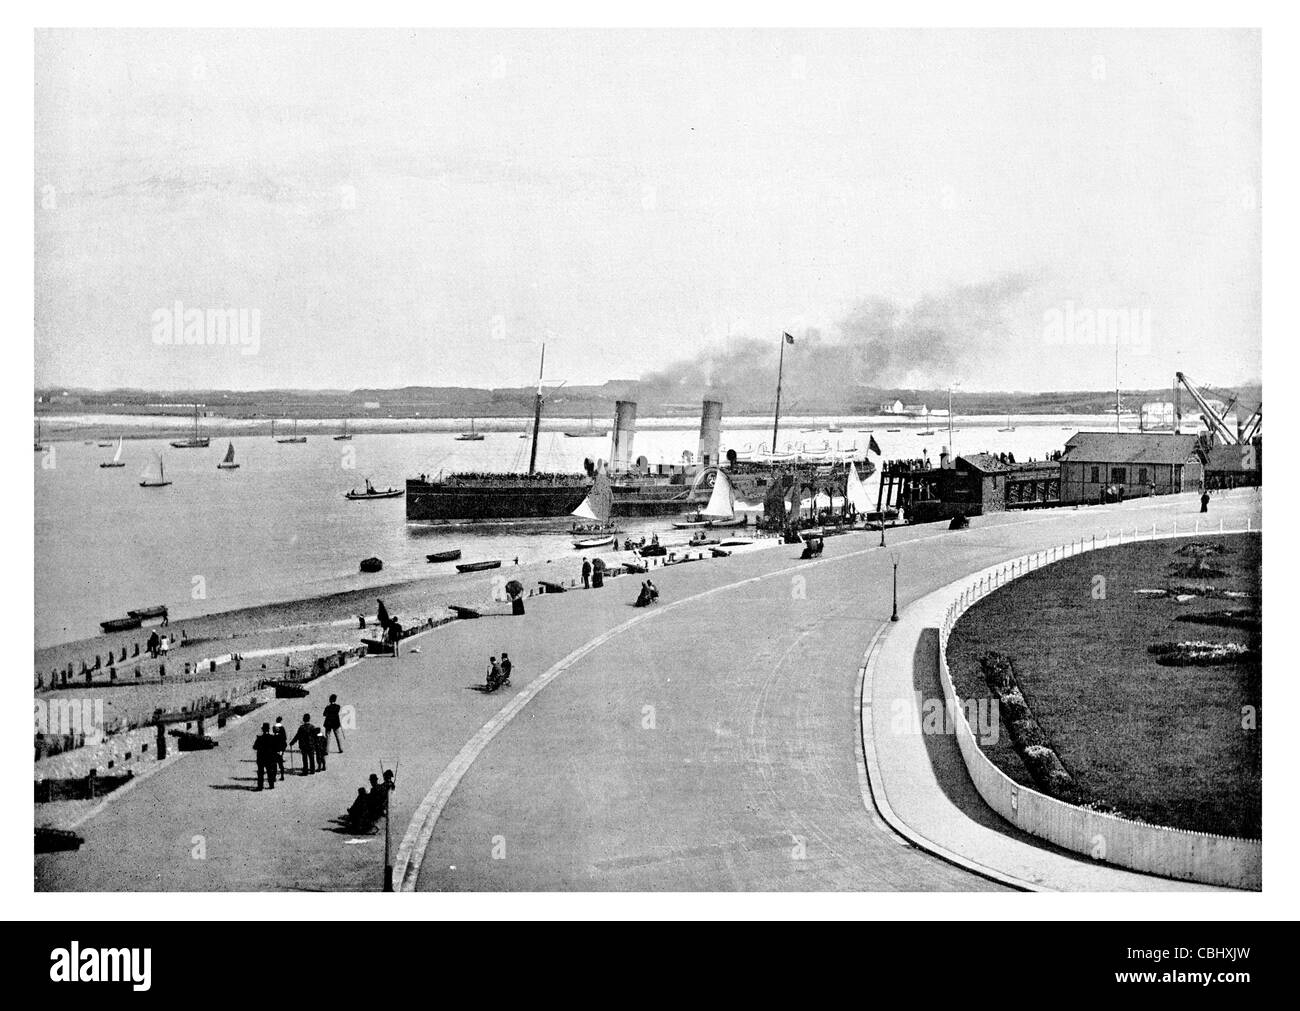 Isla de Man vaporera Fleetwood Lancashire Blackpool Inglaterra victoriana conurbación puerto de pesca de mar profundo steamship ferry SS Foto de stock